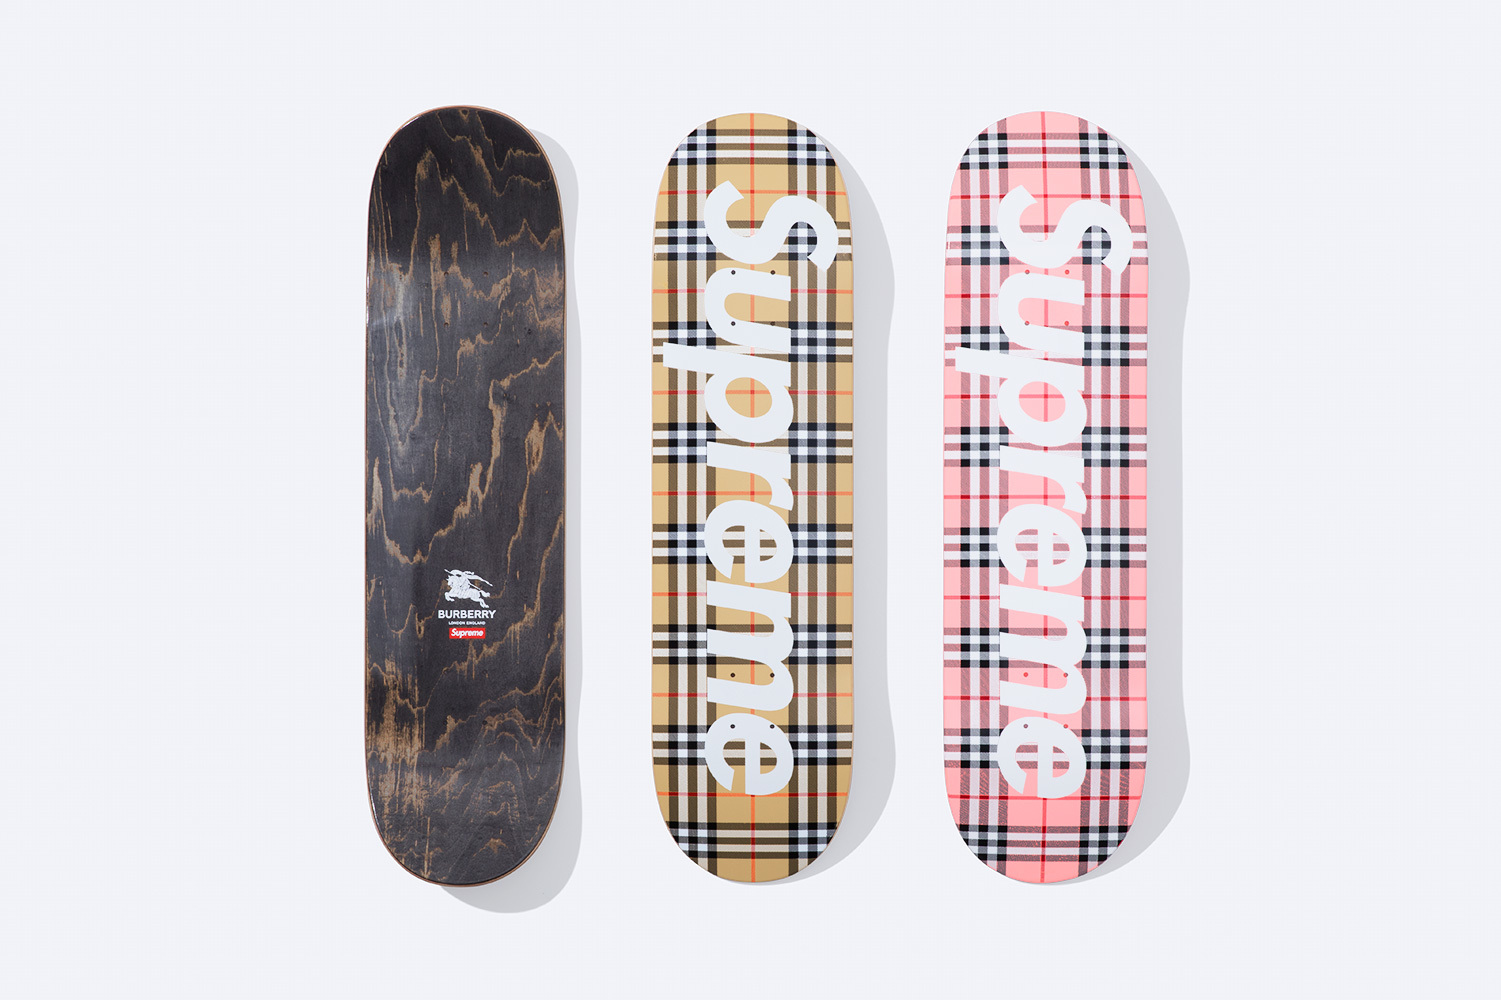 Supreme®/Burberry® Skateboard